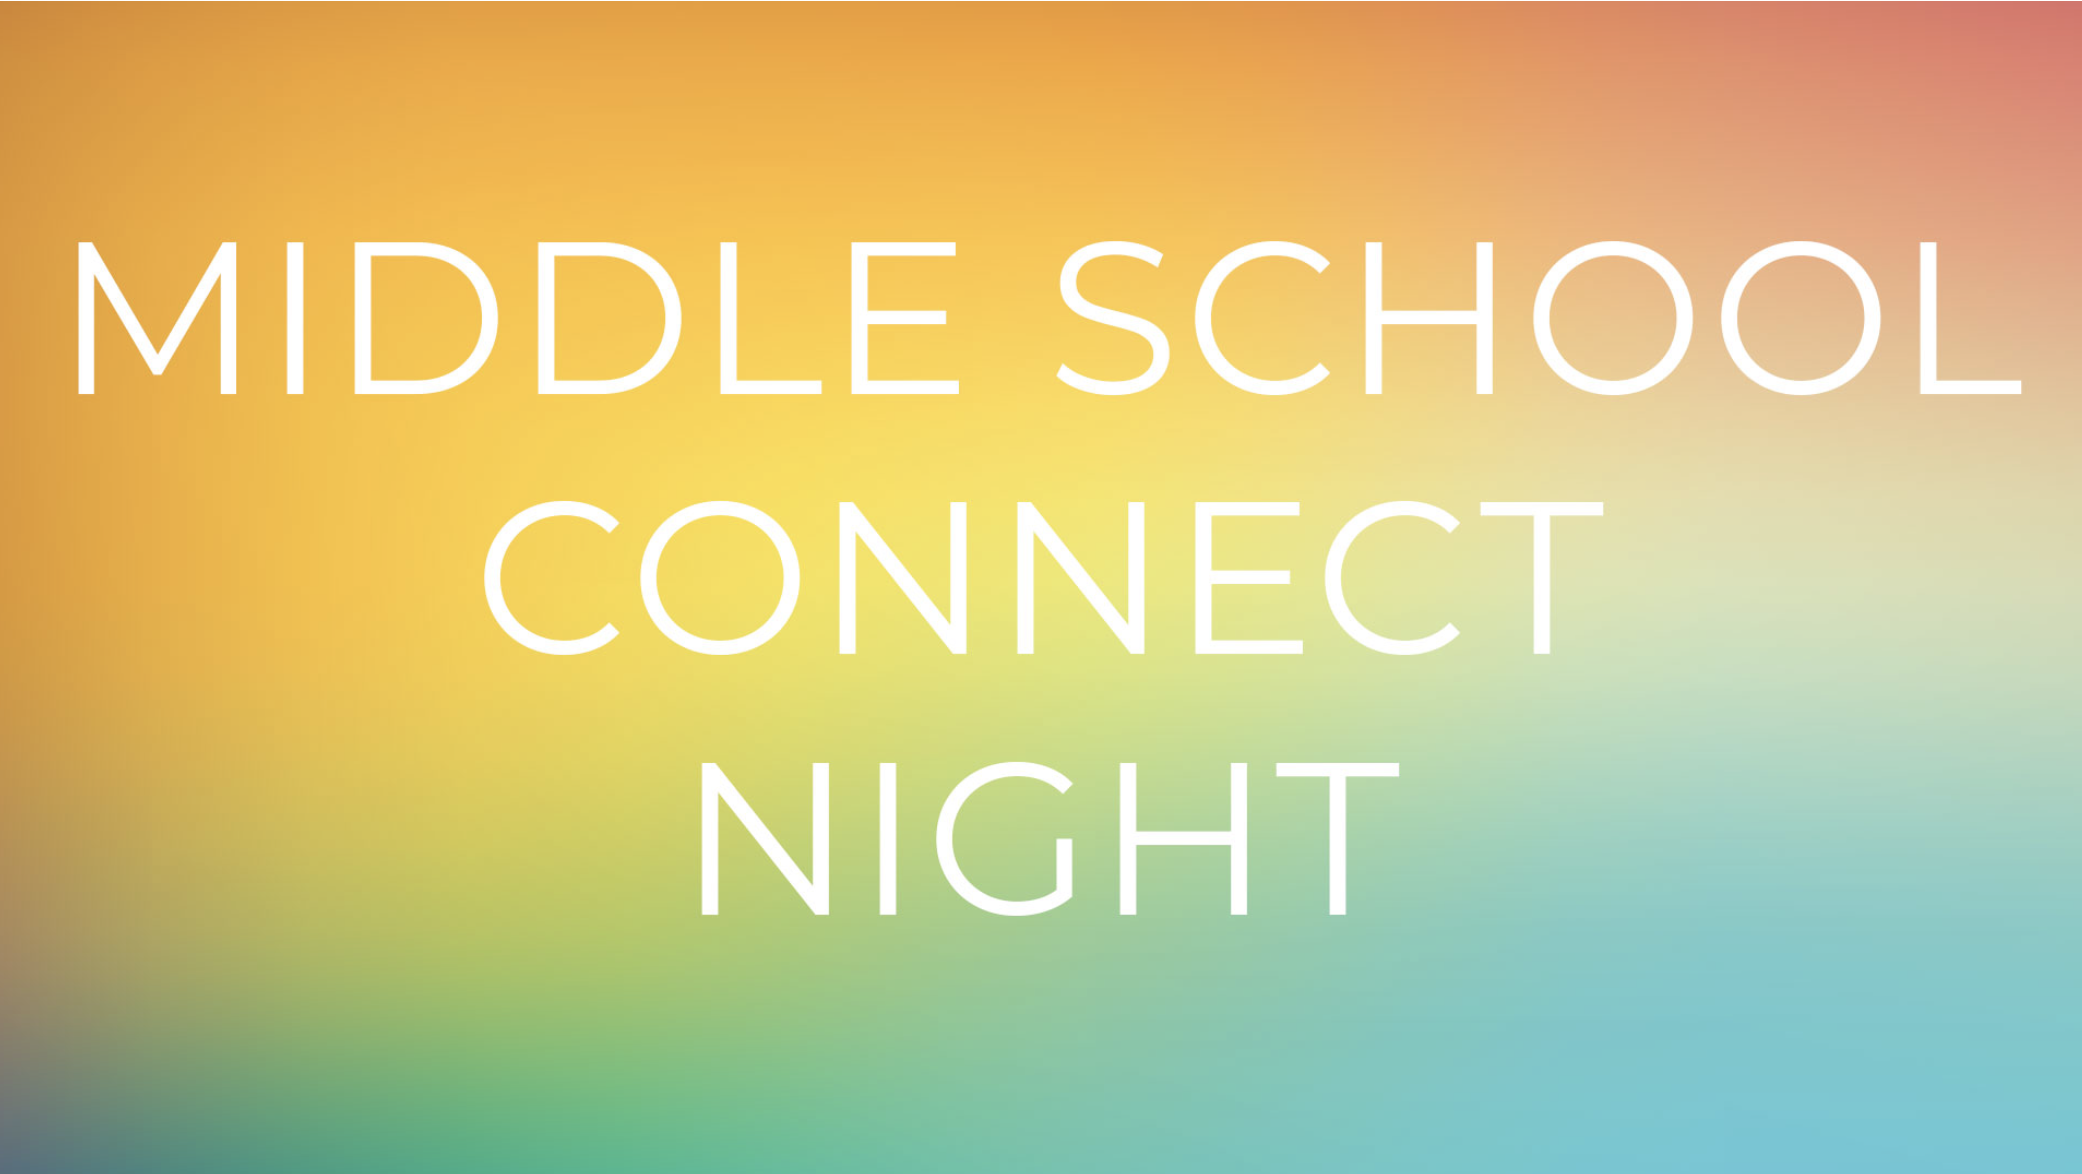 Cottonwood Creek Church - Middle School Connect Night: Arcade92